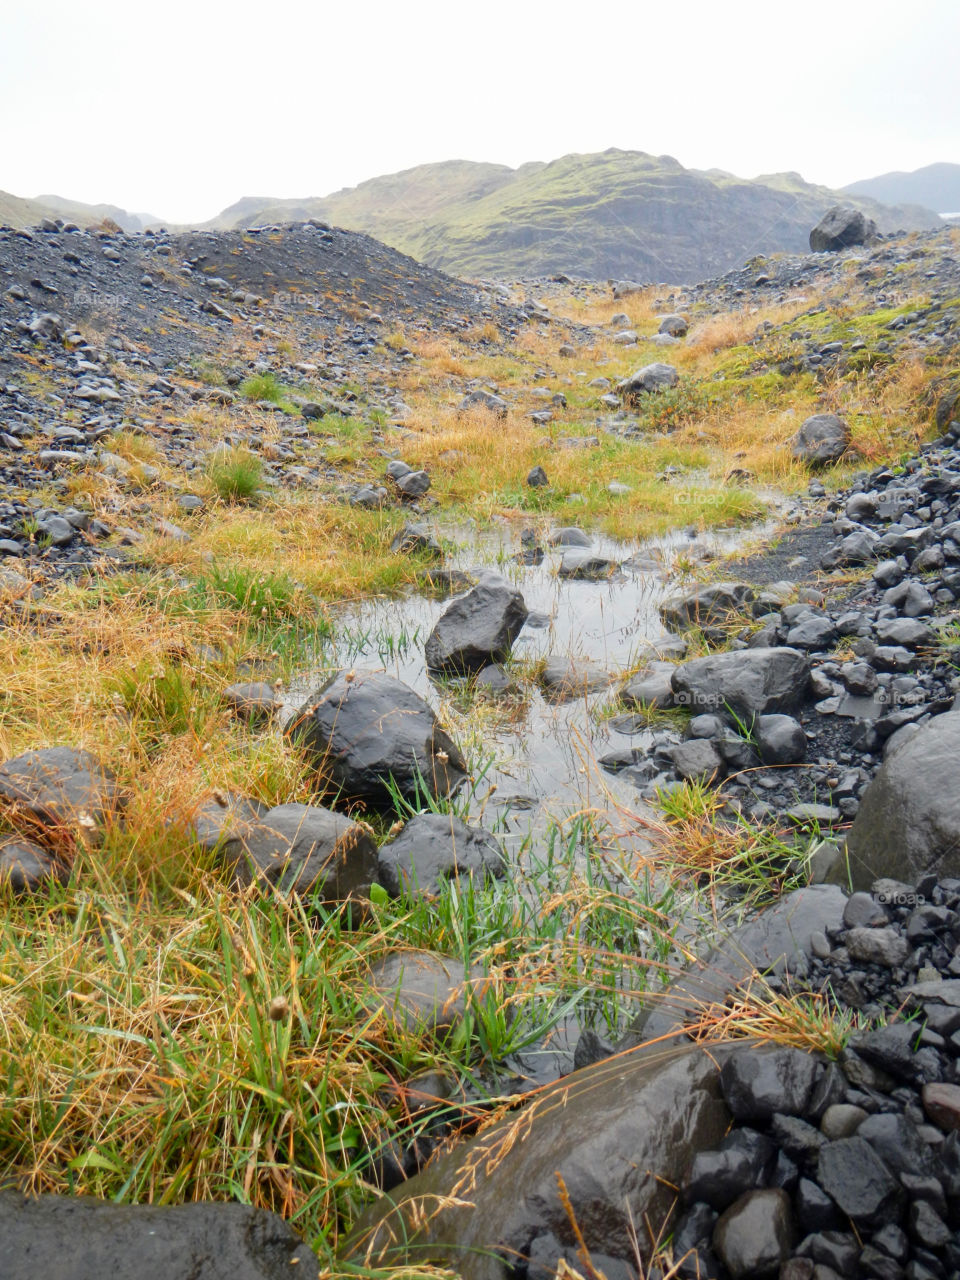 A stream flows down from the Myrdalsjokull glacier in Iceland